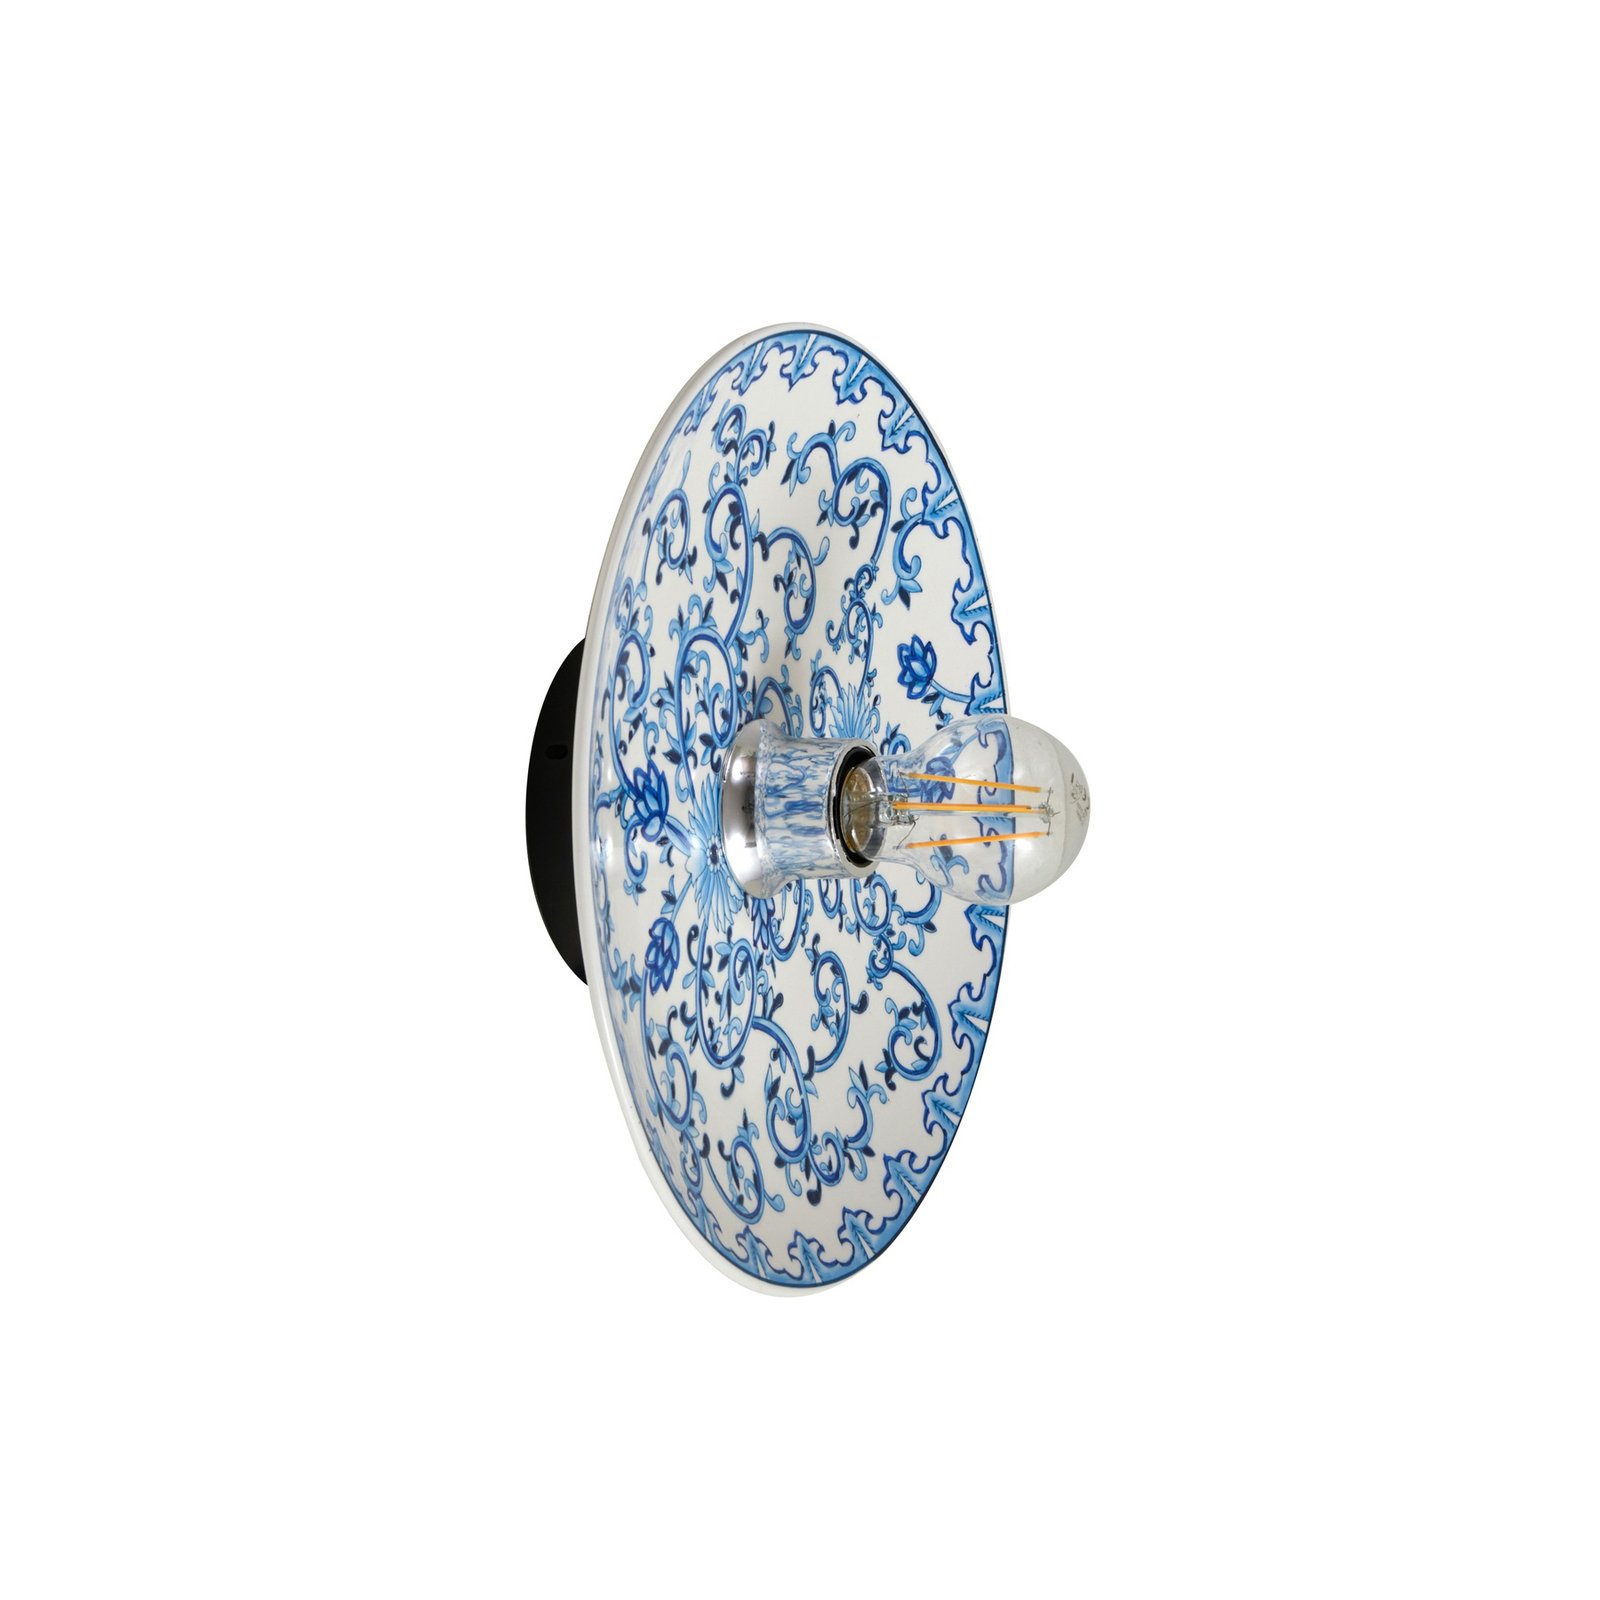 Lucande wall light Faelira, blue/white, ceramic